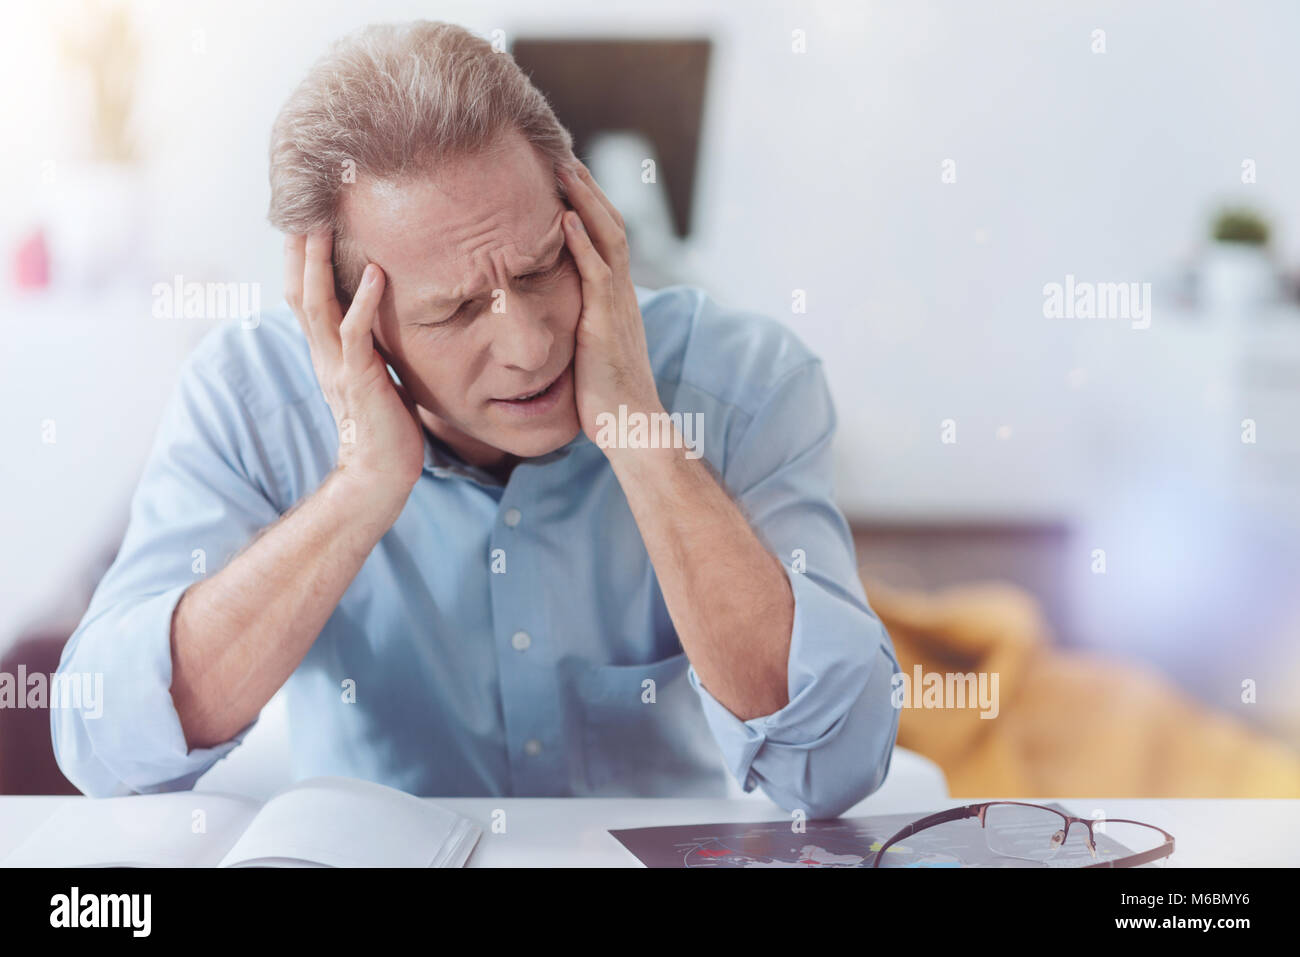 Tired cheerless man suffering from the headache Stock Photo